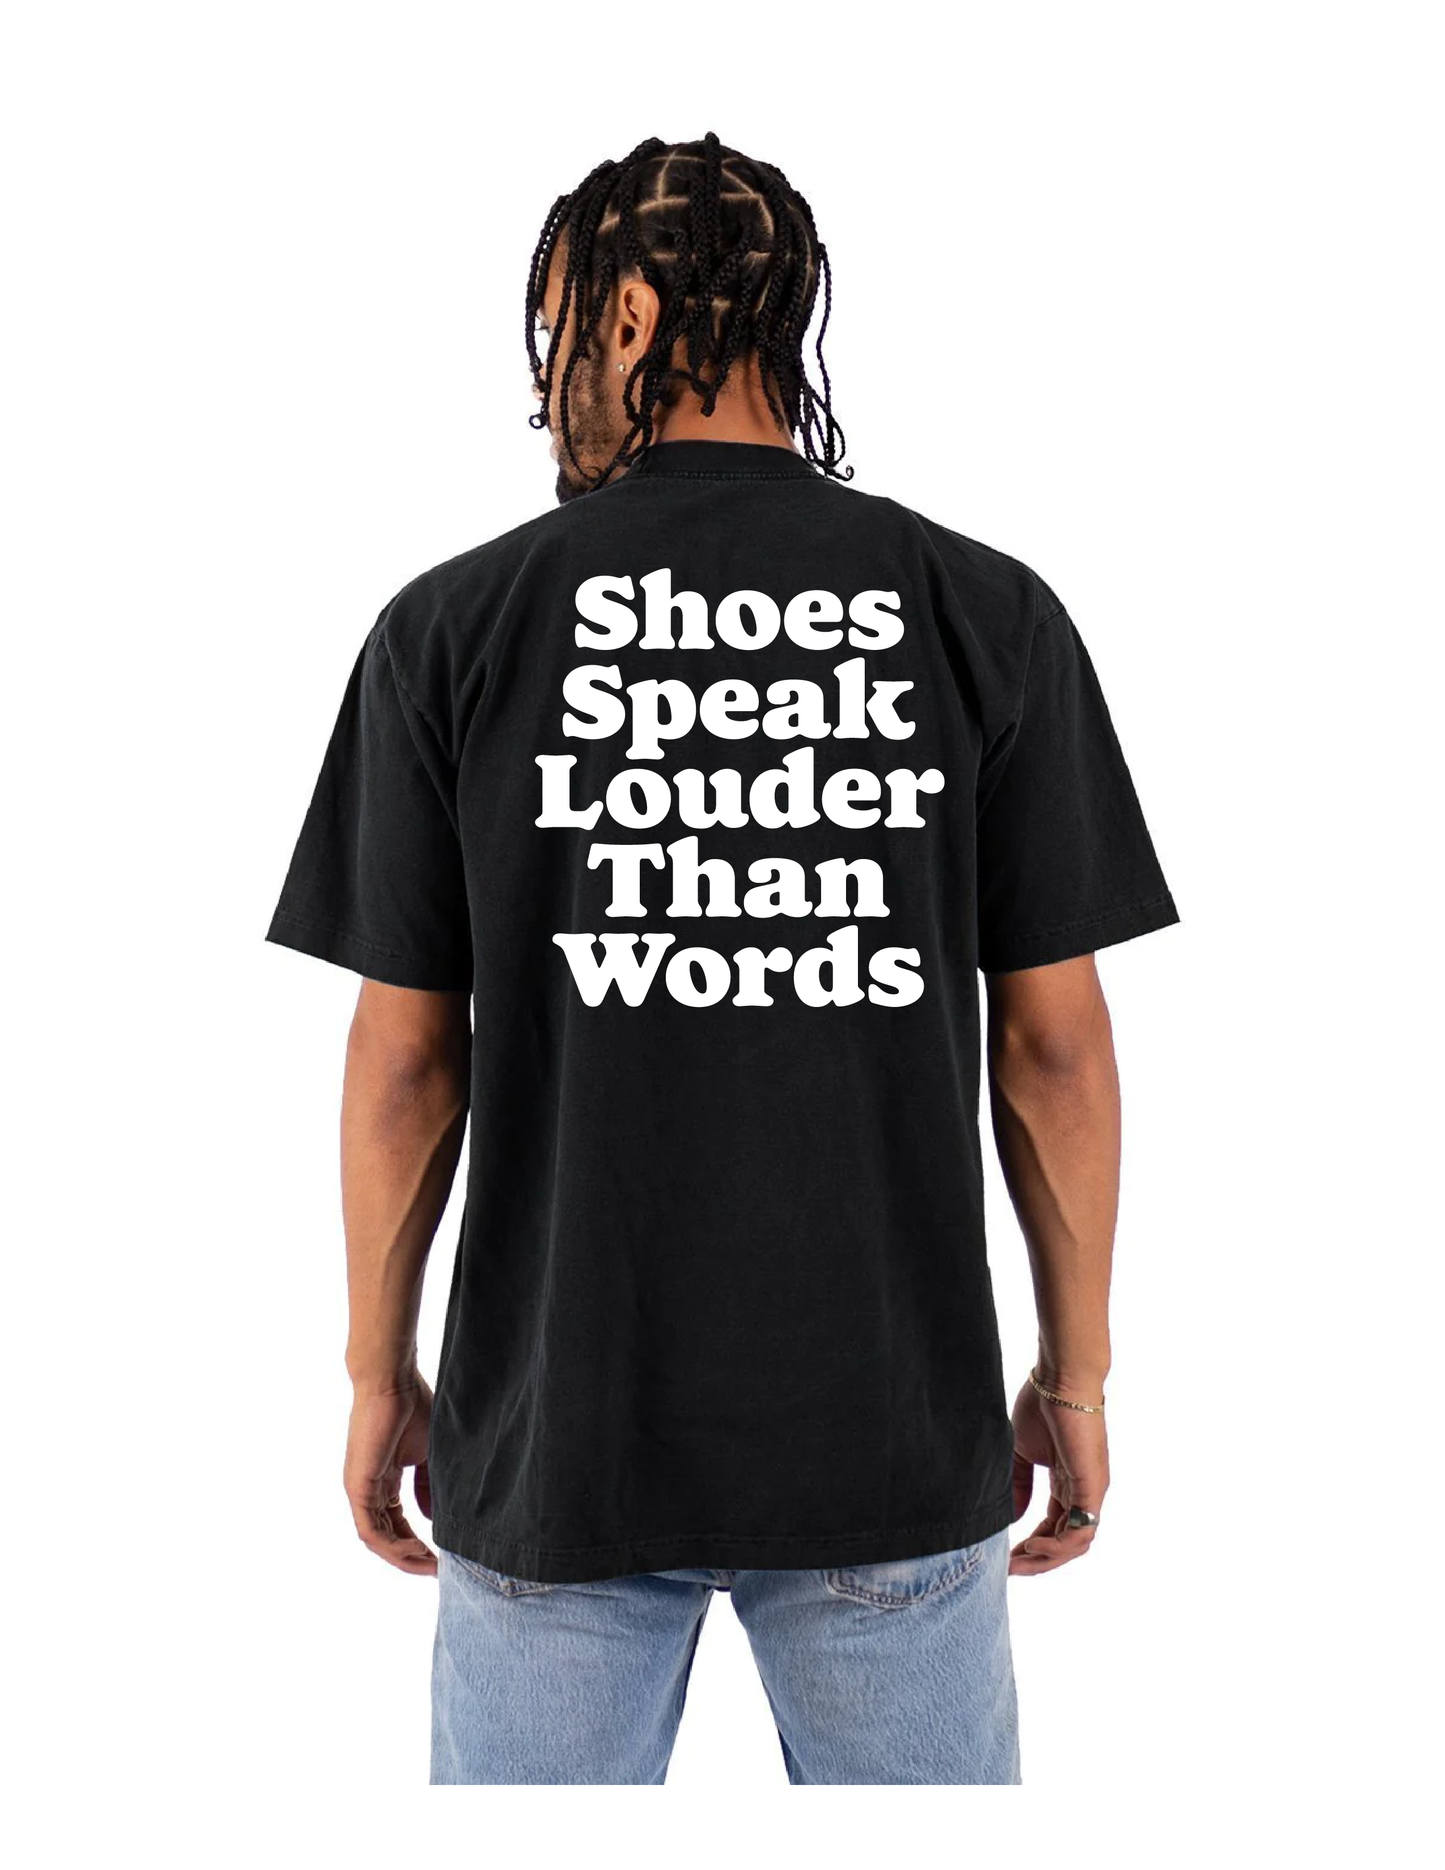 :) Shoes Speak Louder Than Words